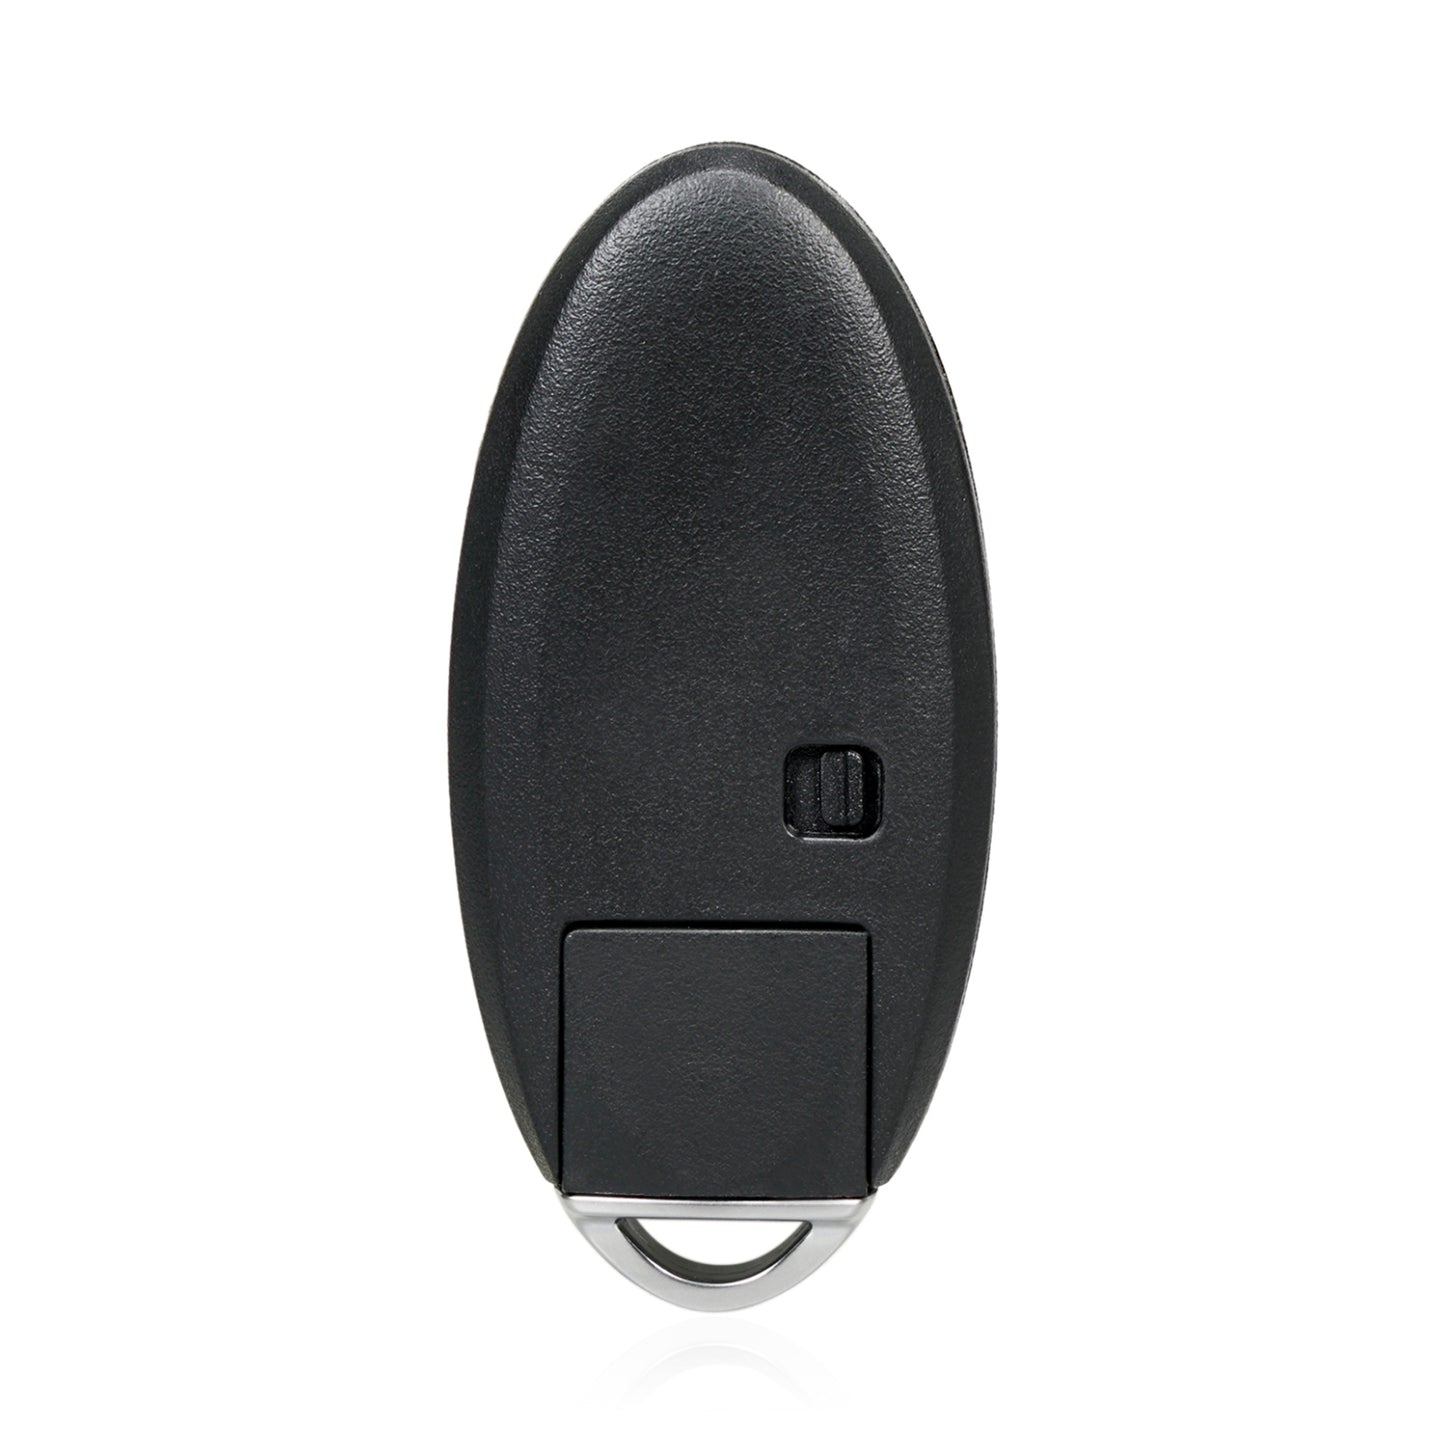 4 Buttons 434MHz Fob Entry Car Remote Key For 2019-2020 Nissan Altima Sentra Versa Infiniti QX50 FCC ID : KR5TXN1 SKU : H698